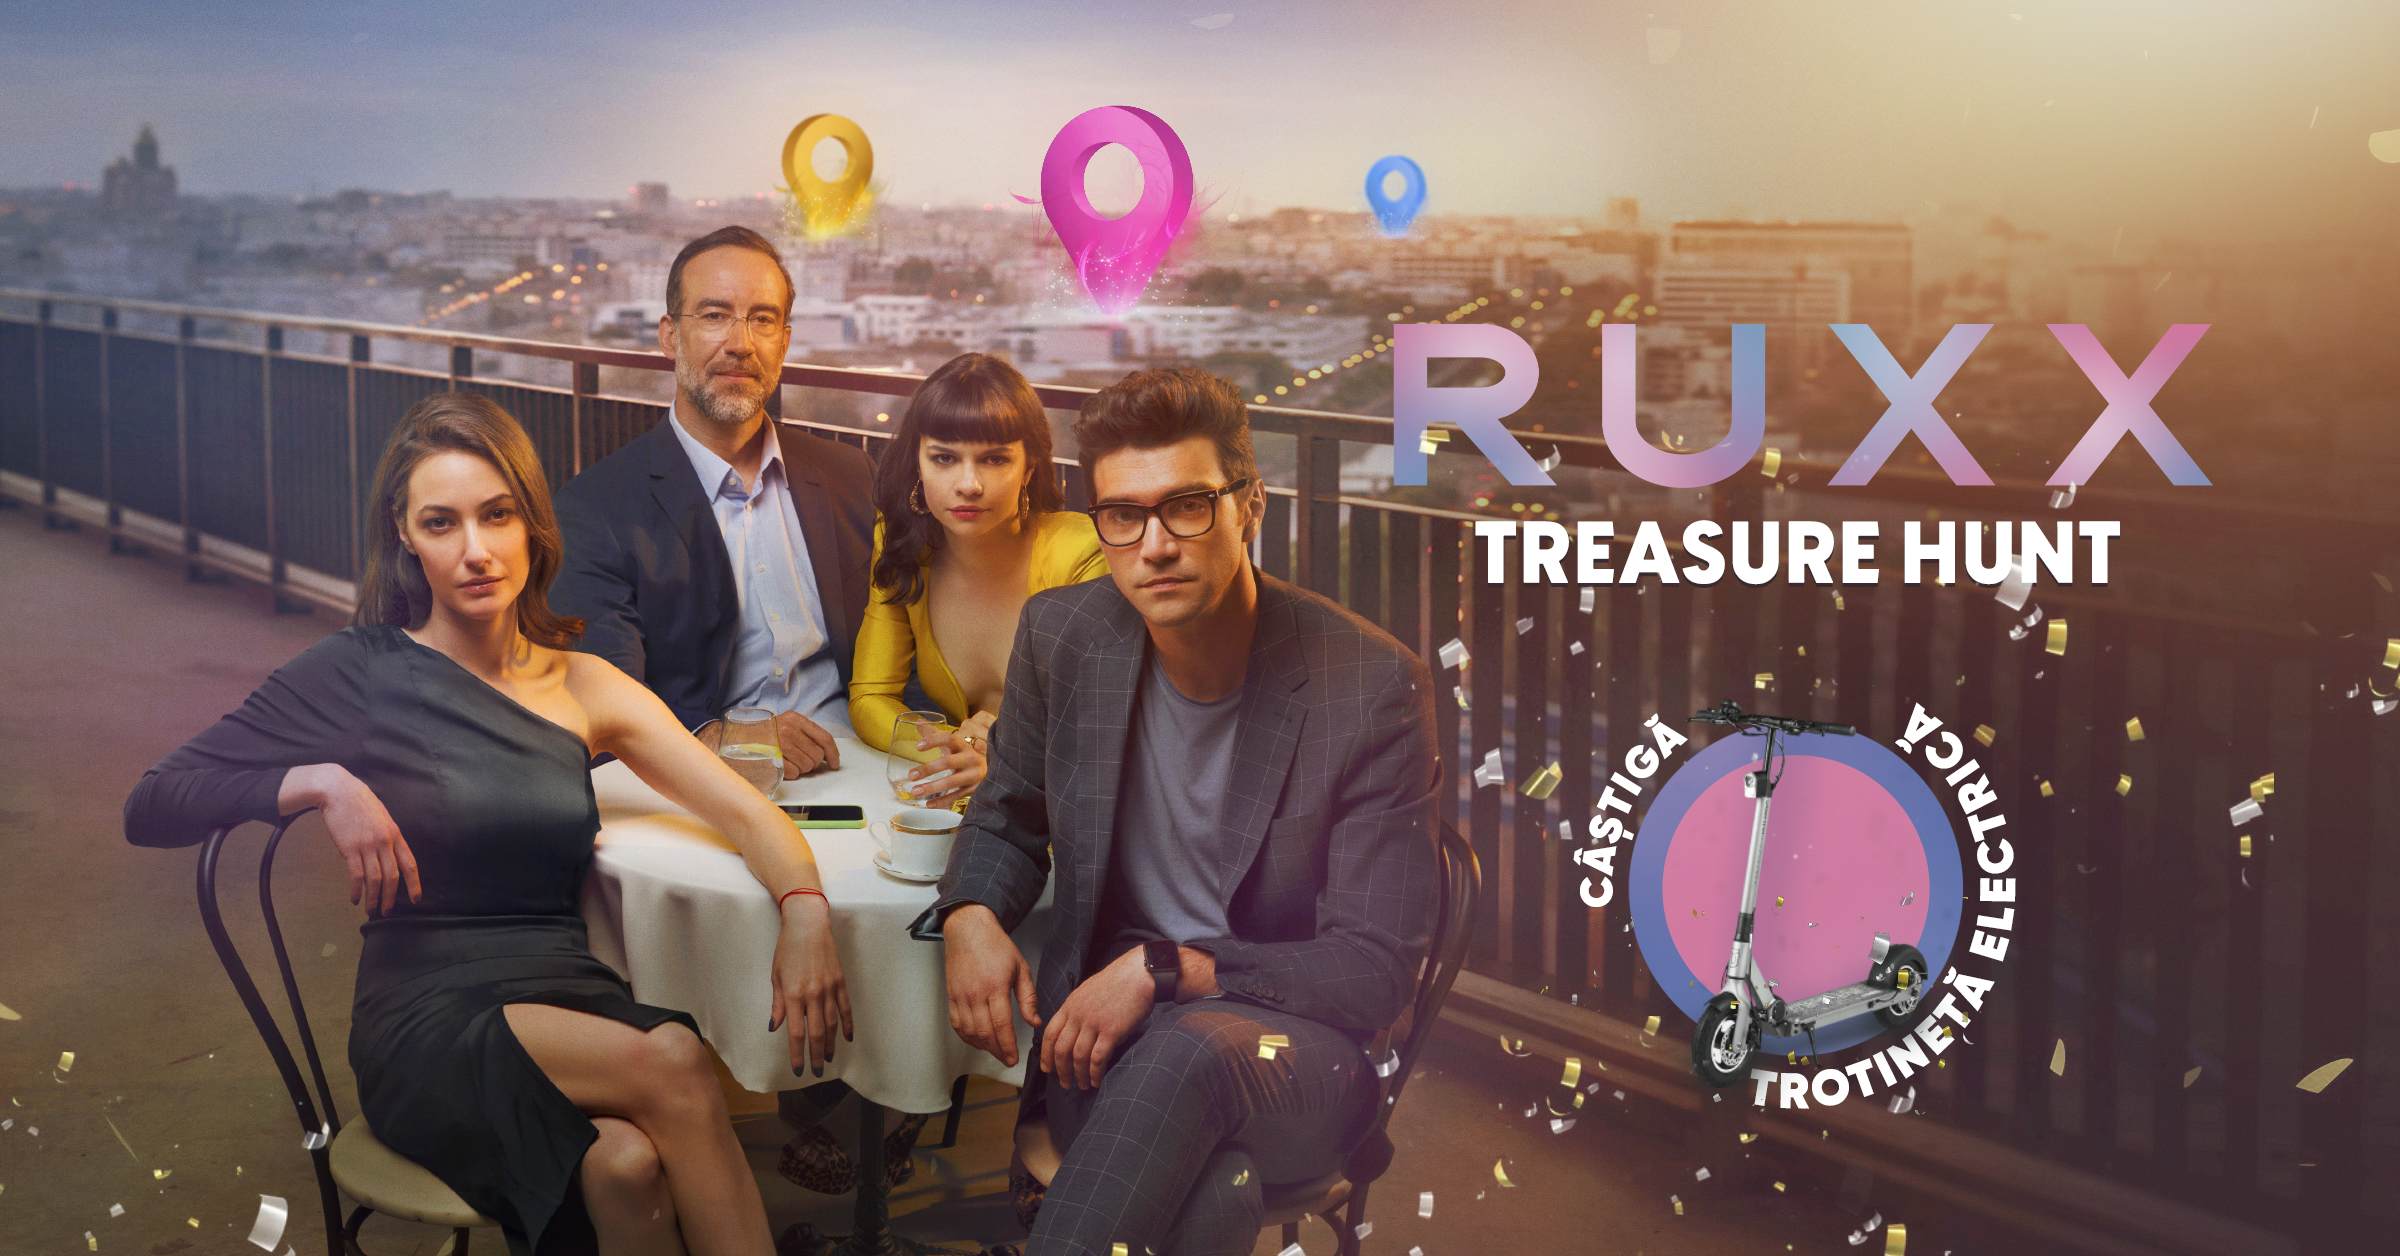 RUXX Treasure Hunt by HBO Max image